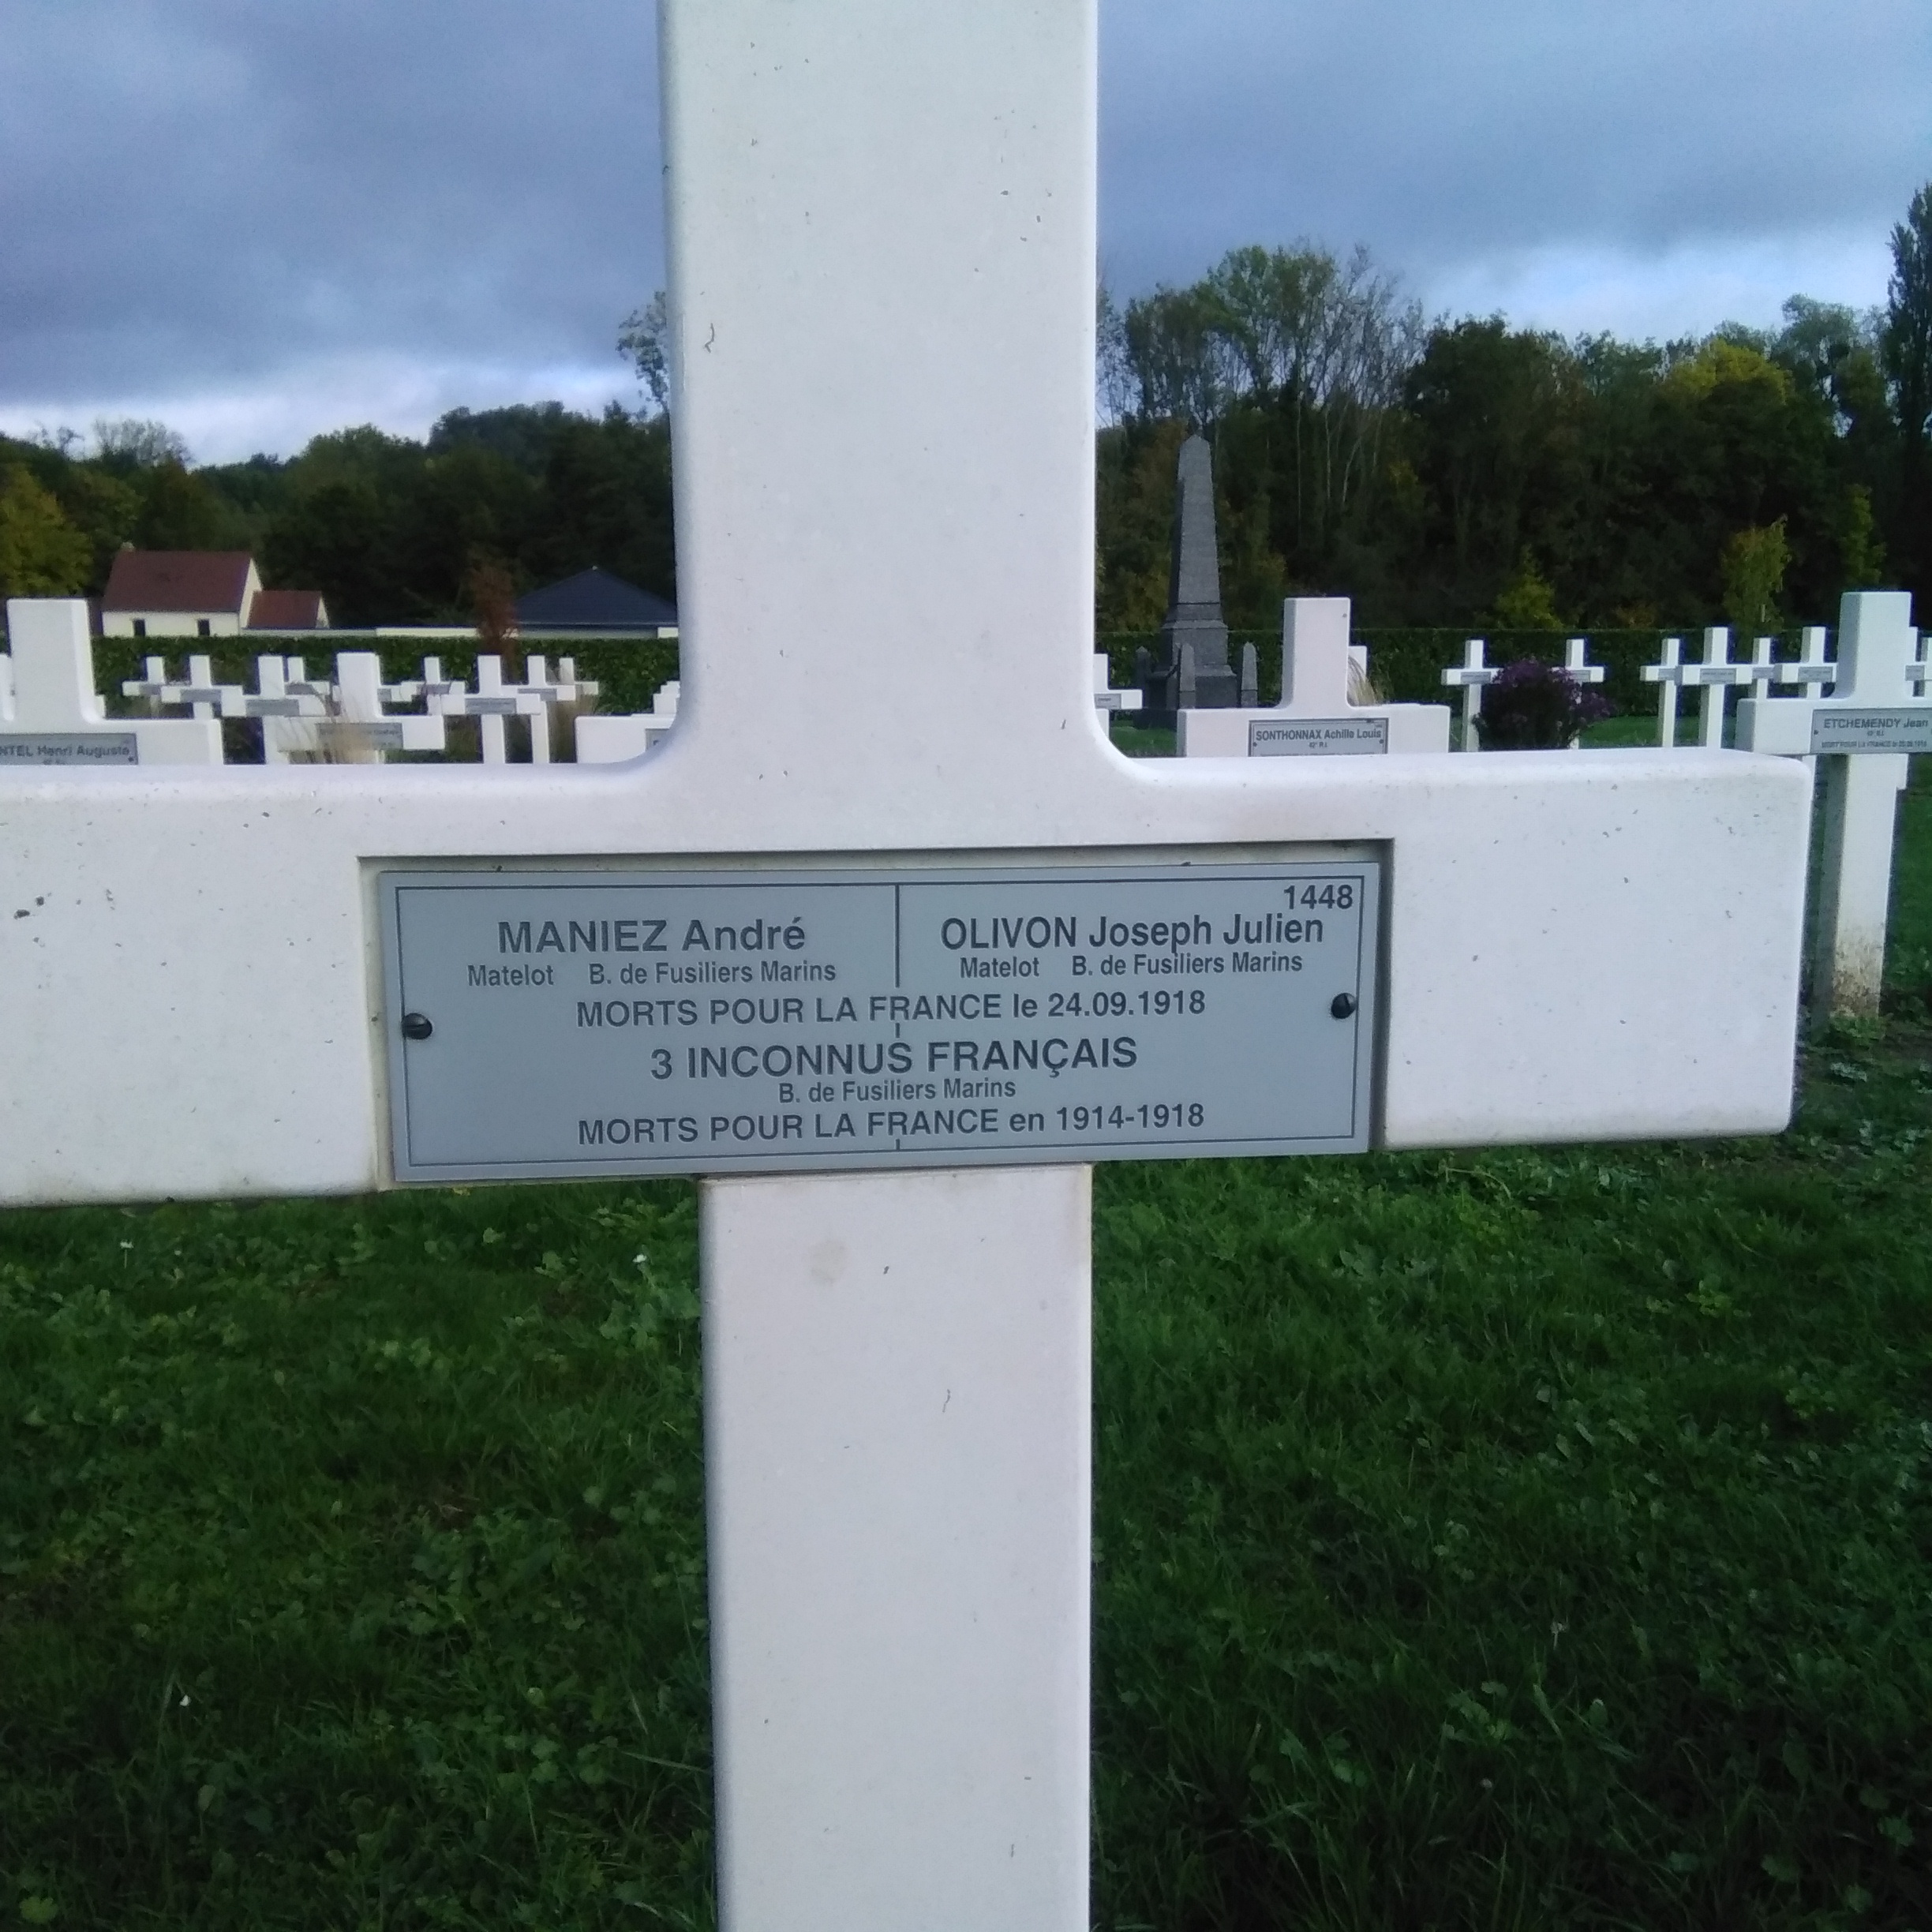 Tombe 1448 collective à Vailly 5 fusiliers-marins tués à Laffaux 24 septembre 1918